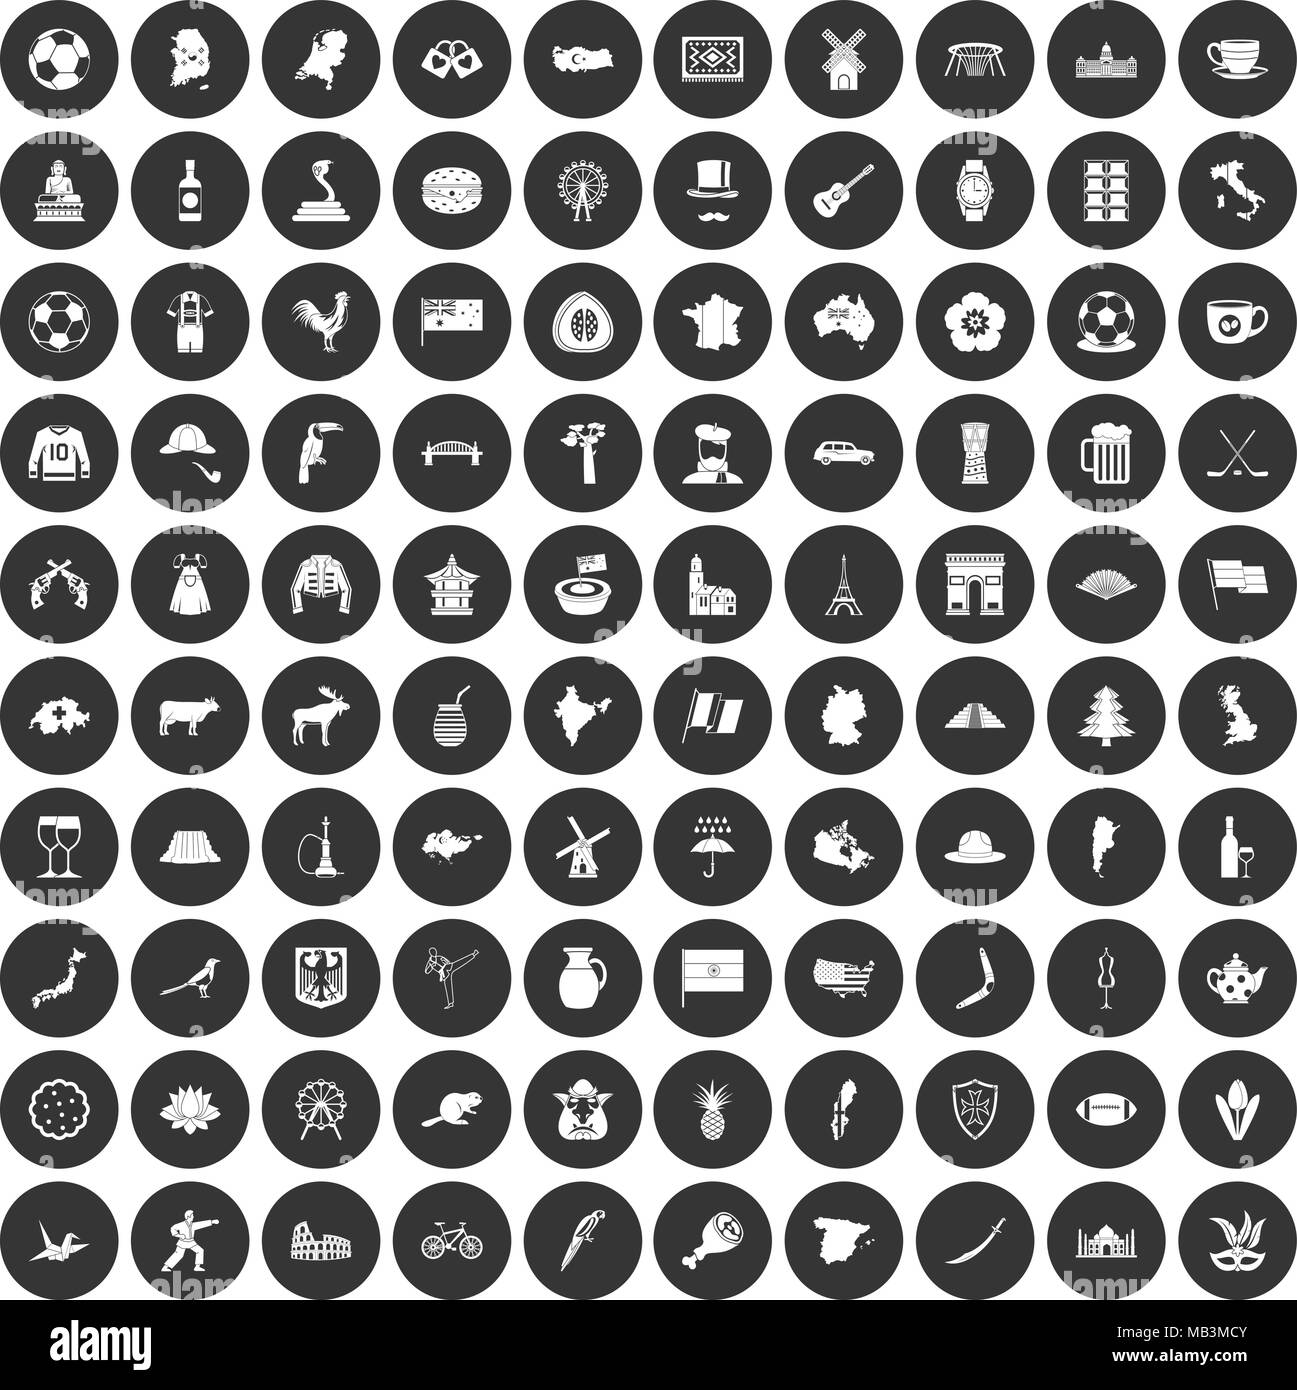 100 Map Icons Set schwarz Kreis Stock Vektor